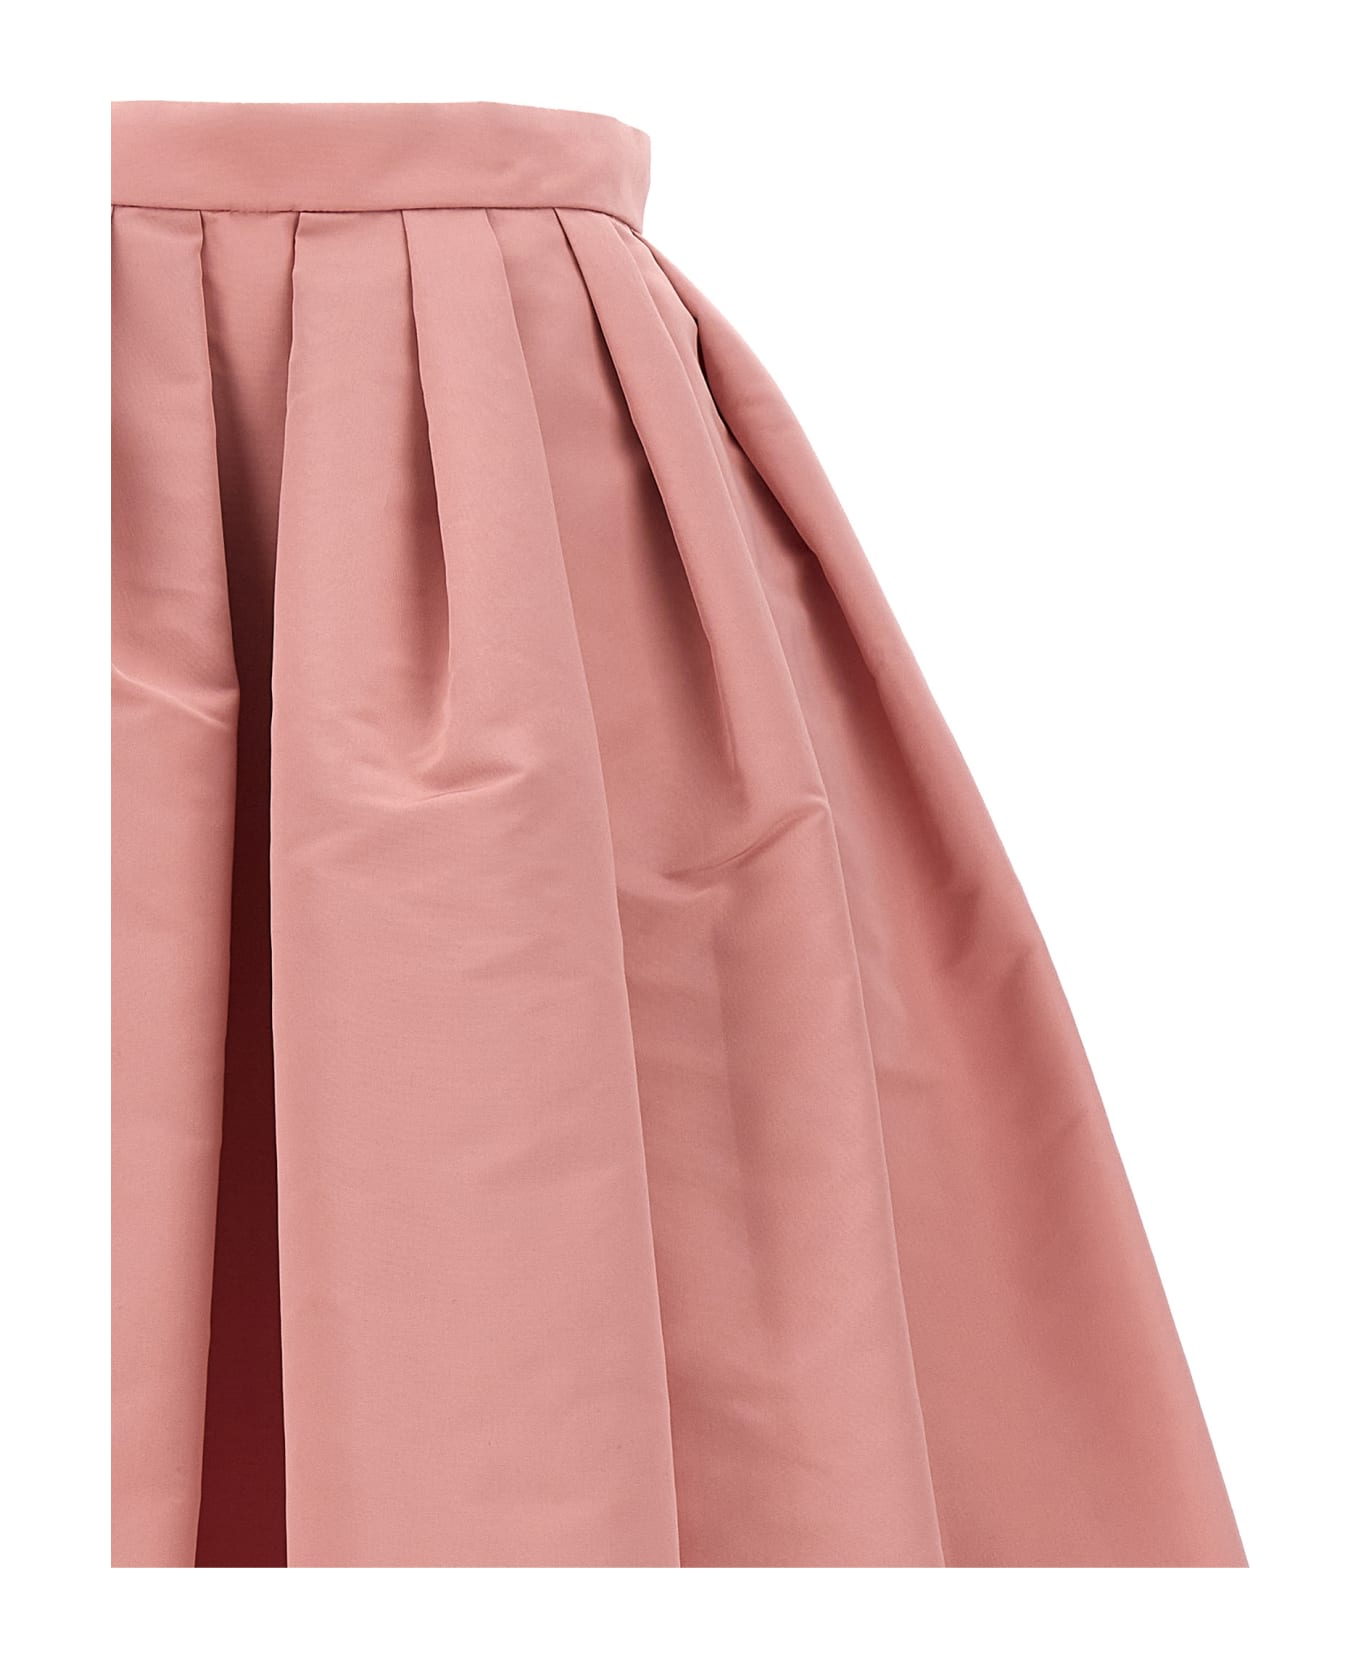 Alexander McQueen Pleated Midi Skirt - Pink